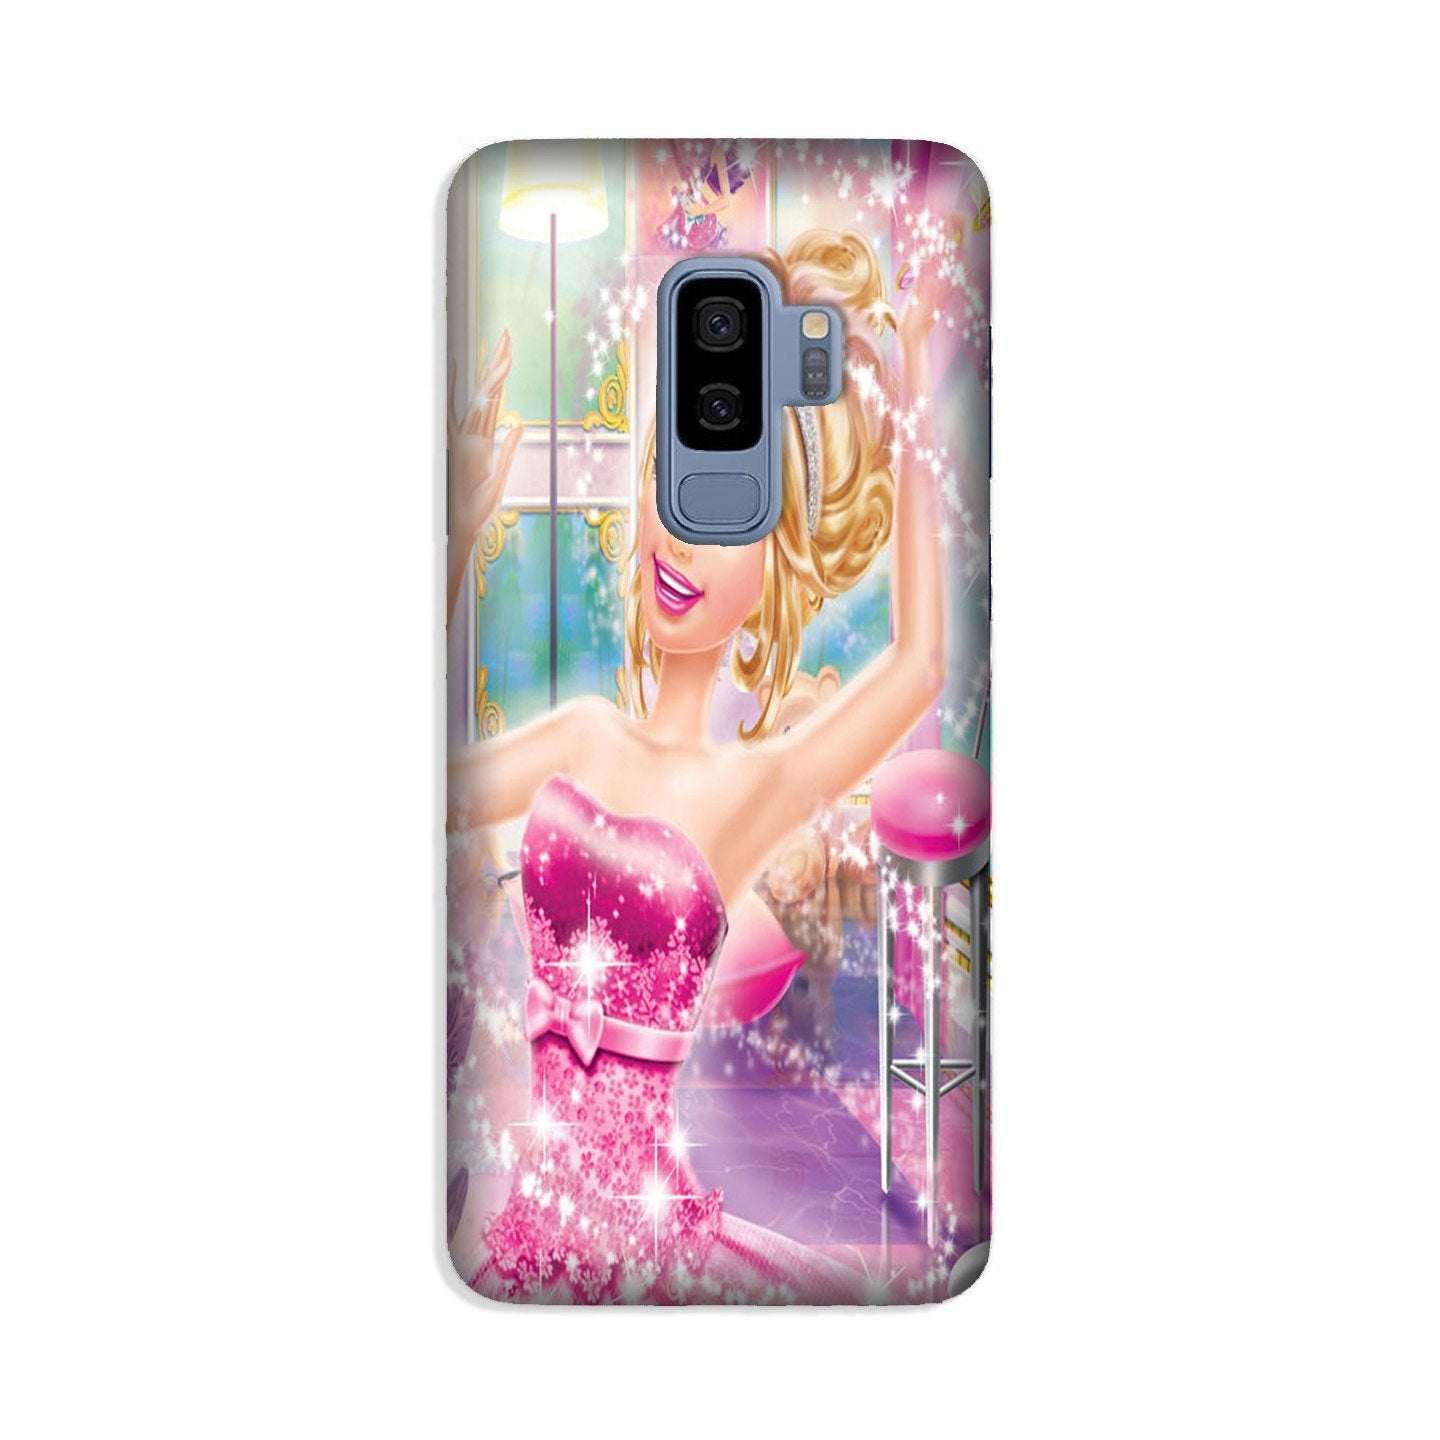 Princesses Case for Galaxy S9 Plus